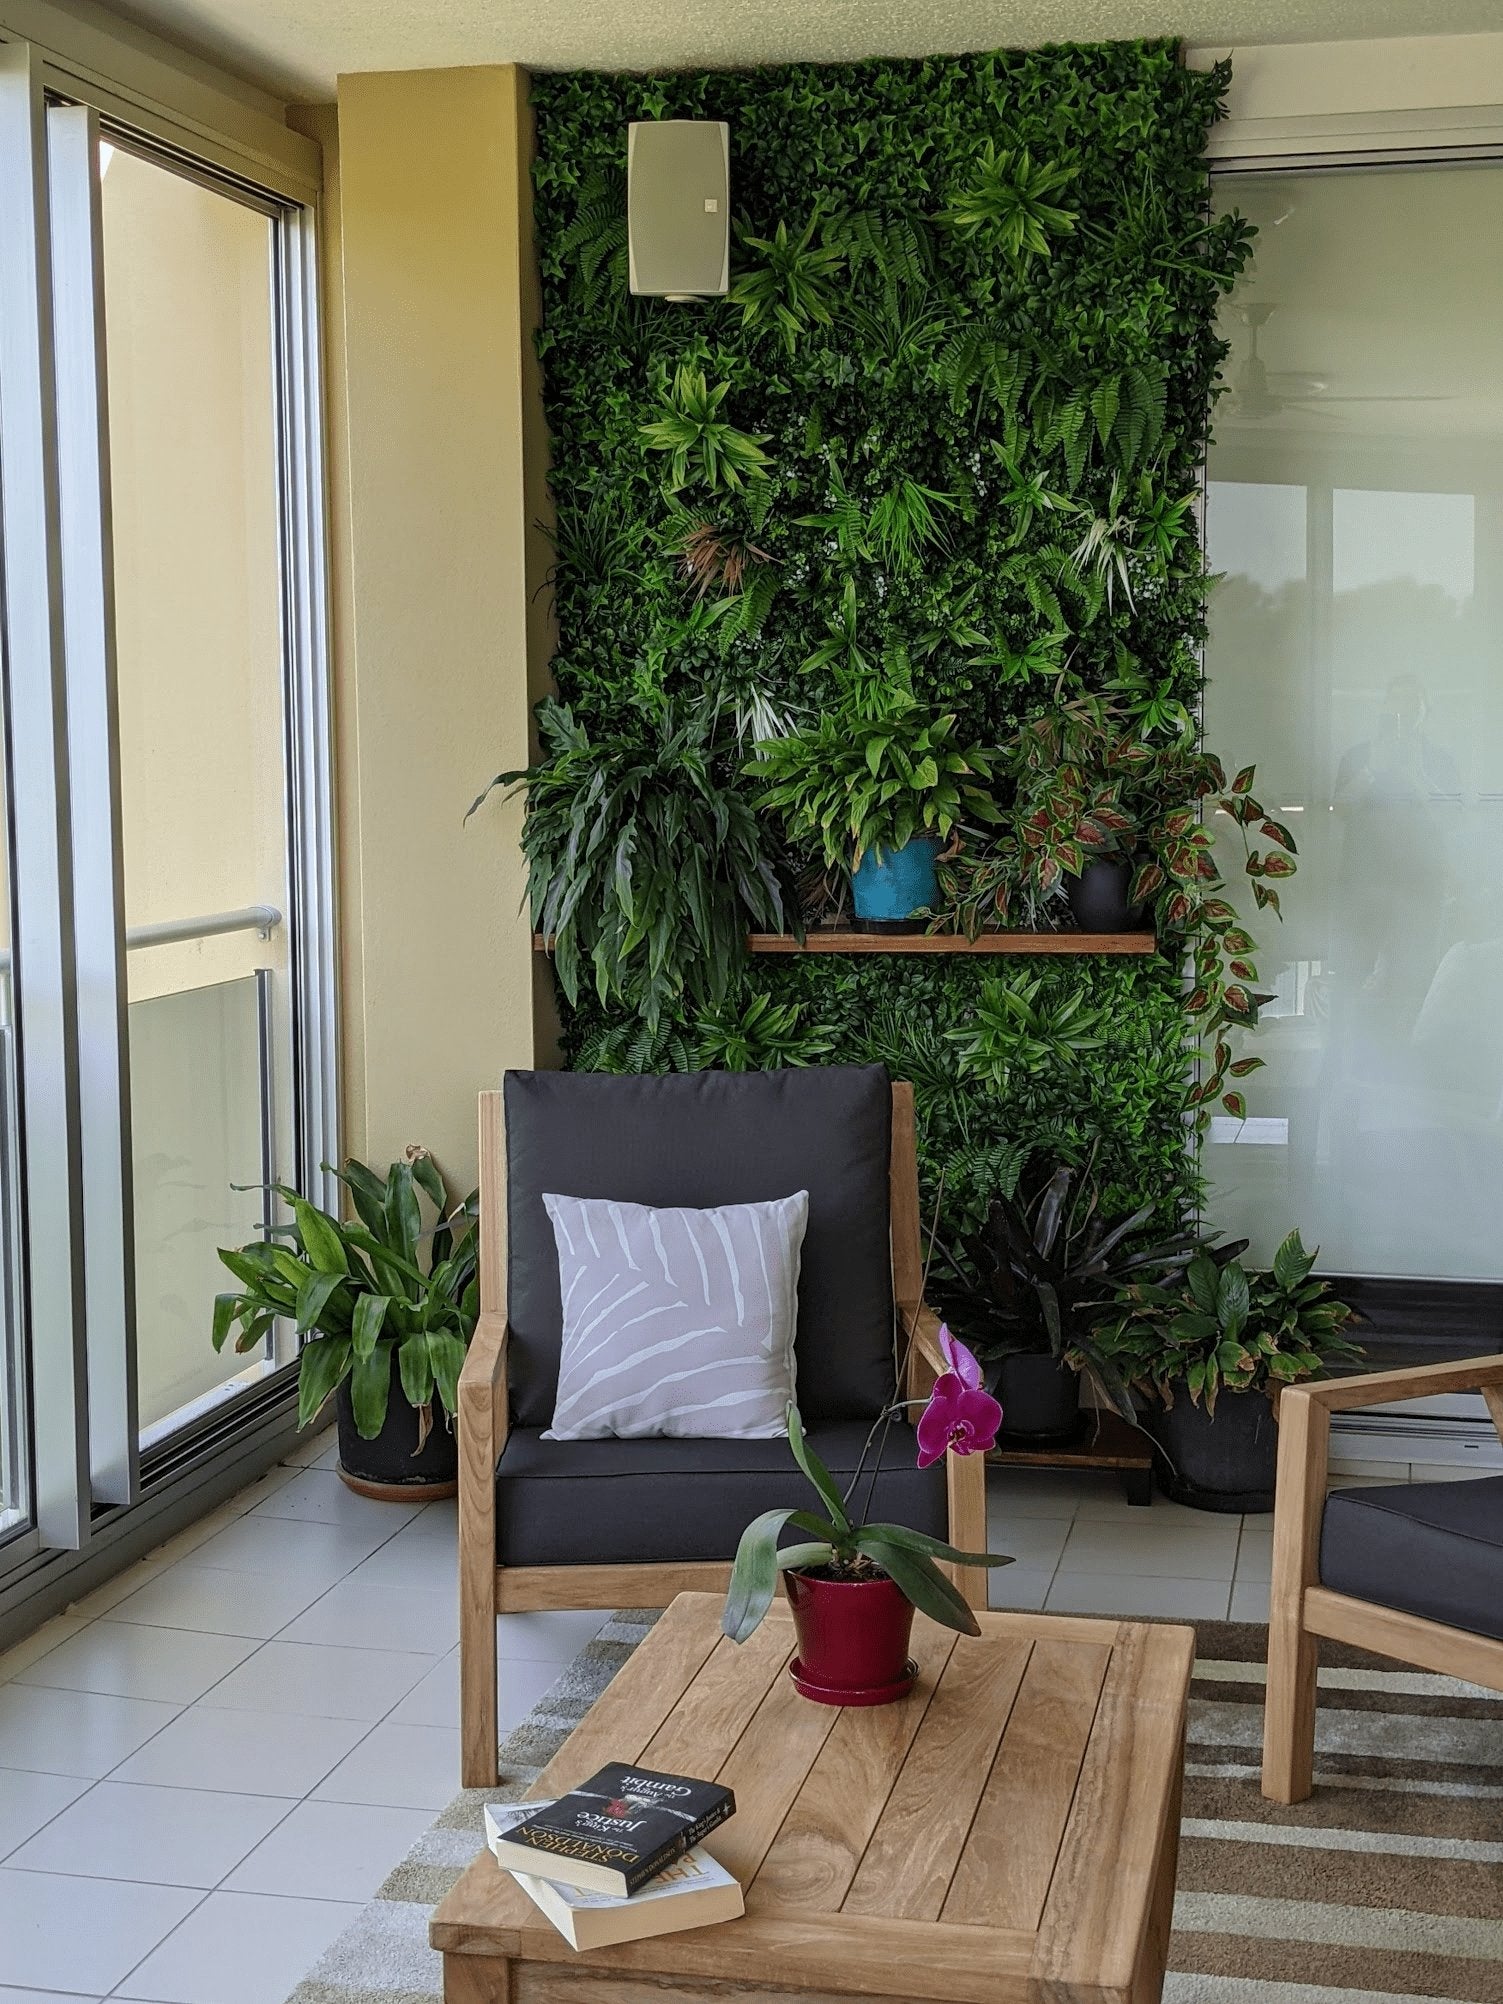 Wild Tropics Artificial Vertical Garden / Fake Green Wall 1m x 1m UV Resistant - Designer Vertical Gardens artificial garden wall plants artificial green wall installation